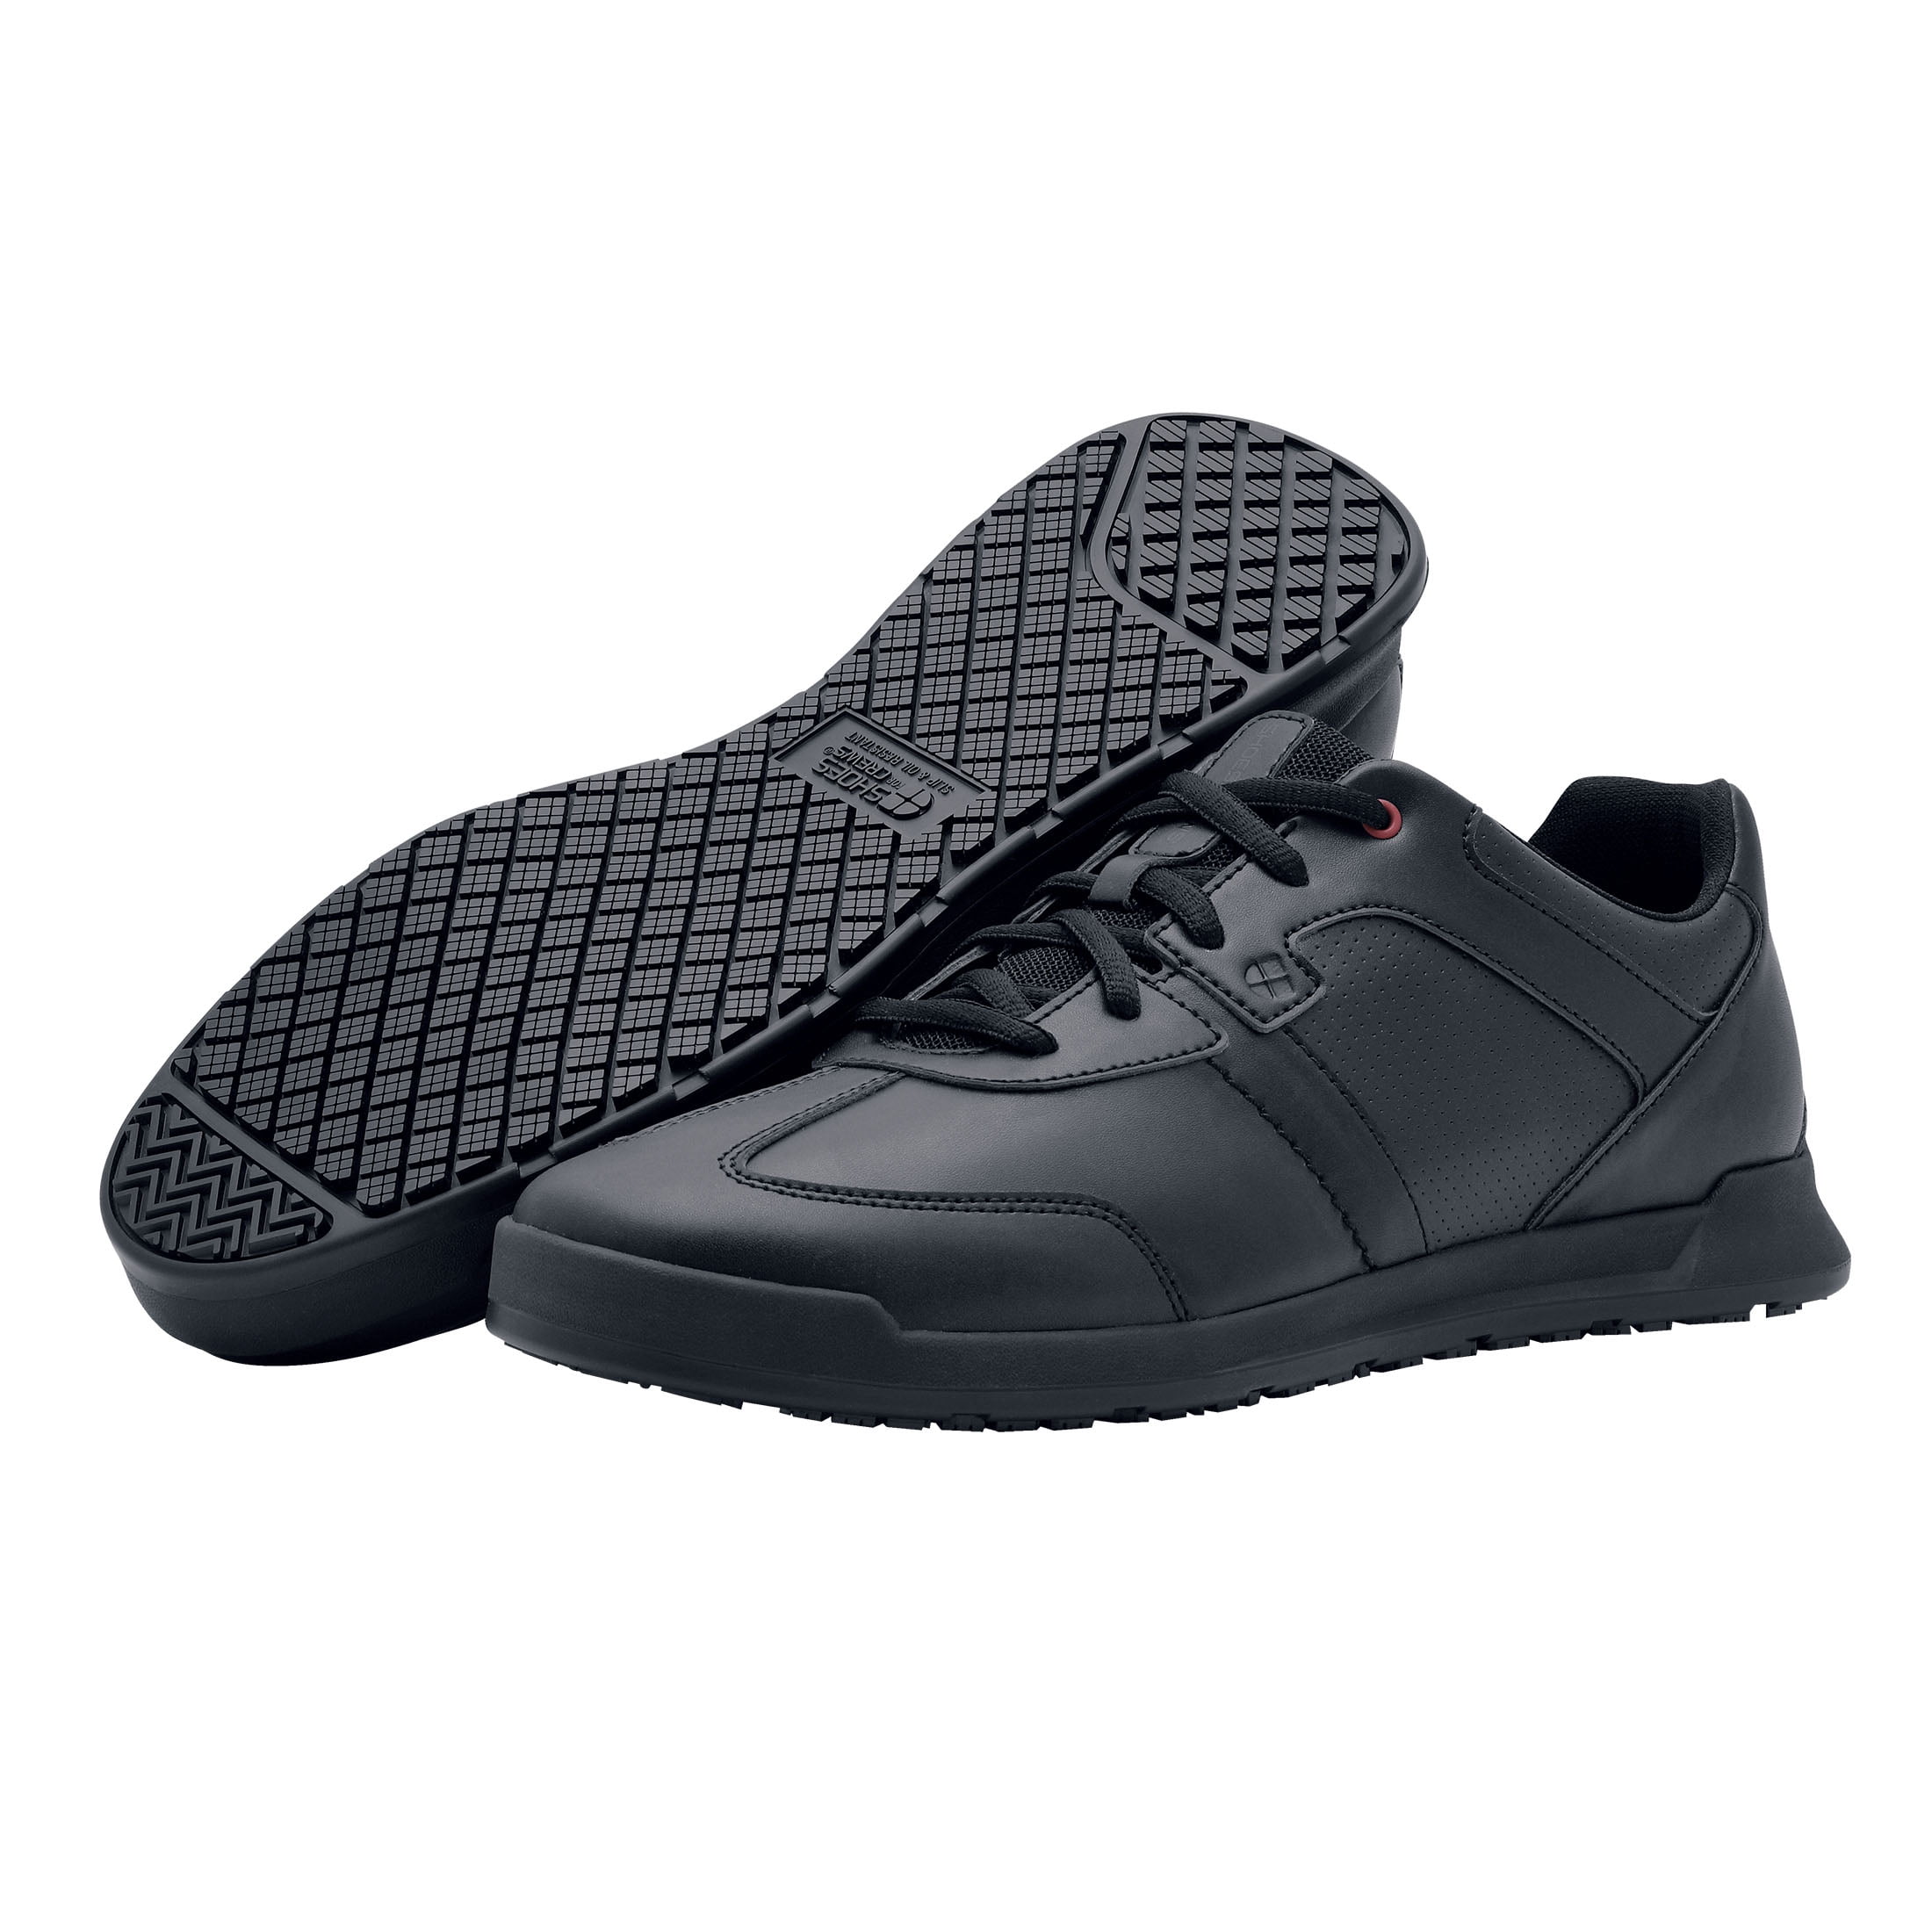 Shoes for Crews II Men's Resistant Work Shoes, Water Resistant, Black, Size 10 Walmart.com